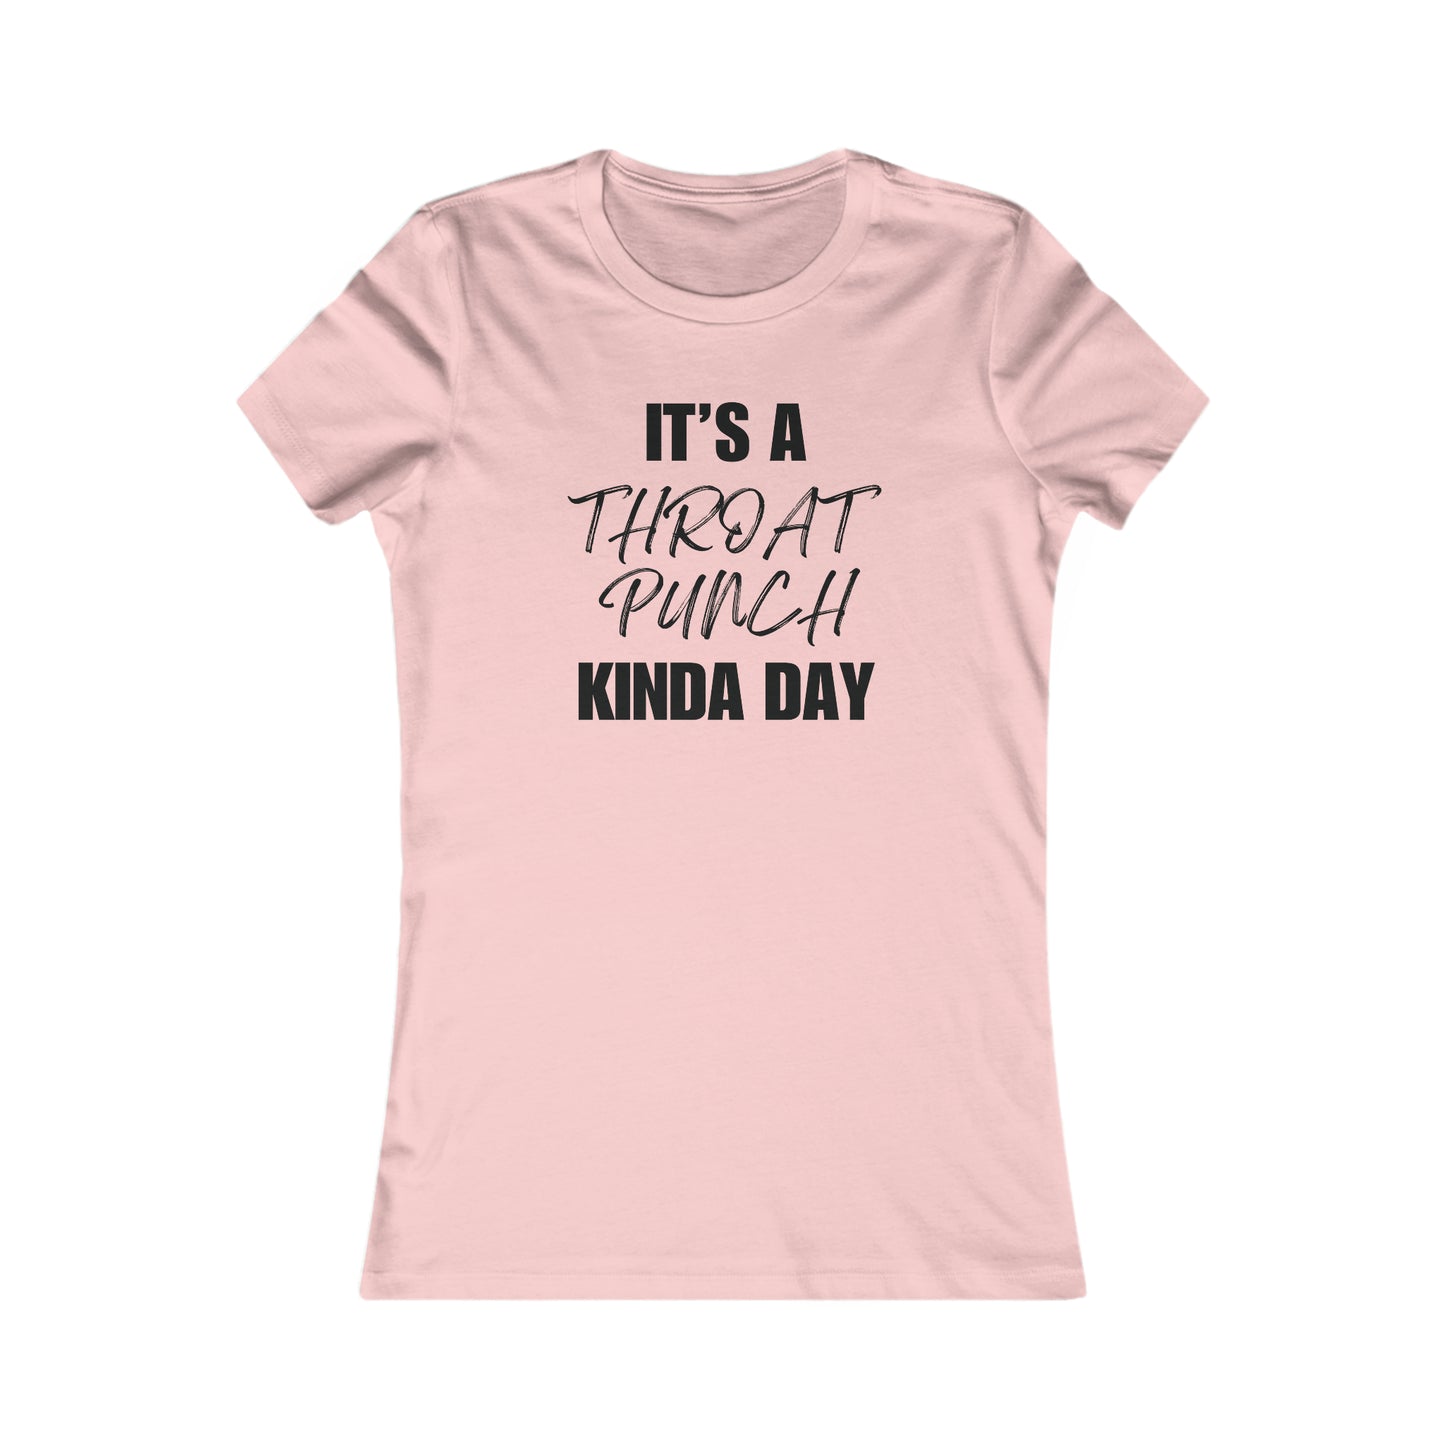 It’s A Throat Punch Kinda Day - Women's Favorite Tee